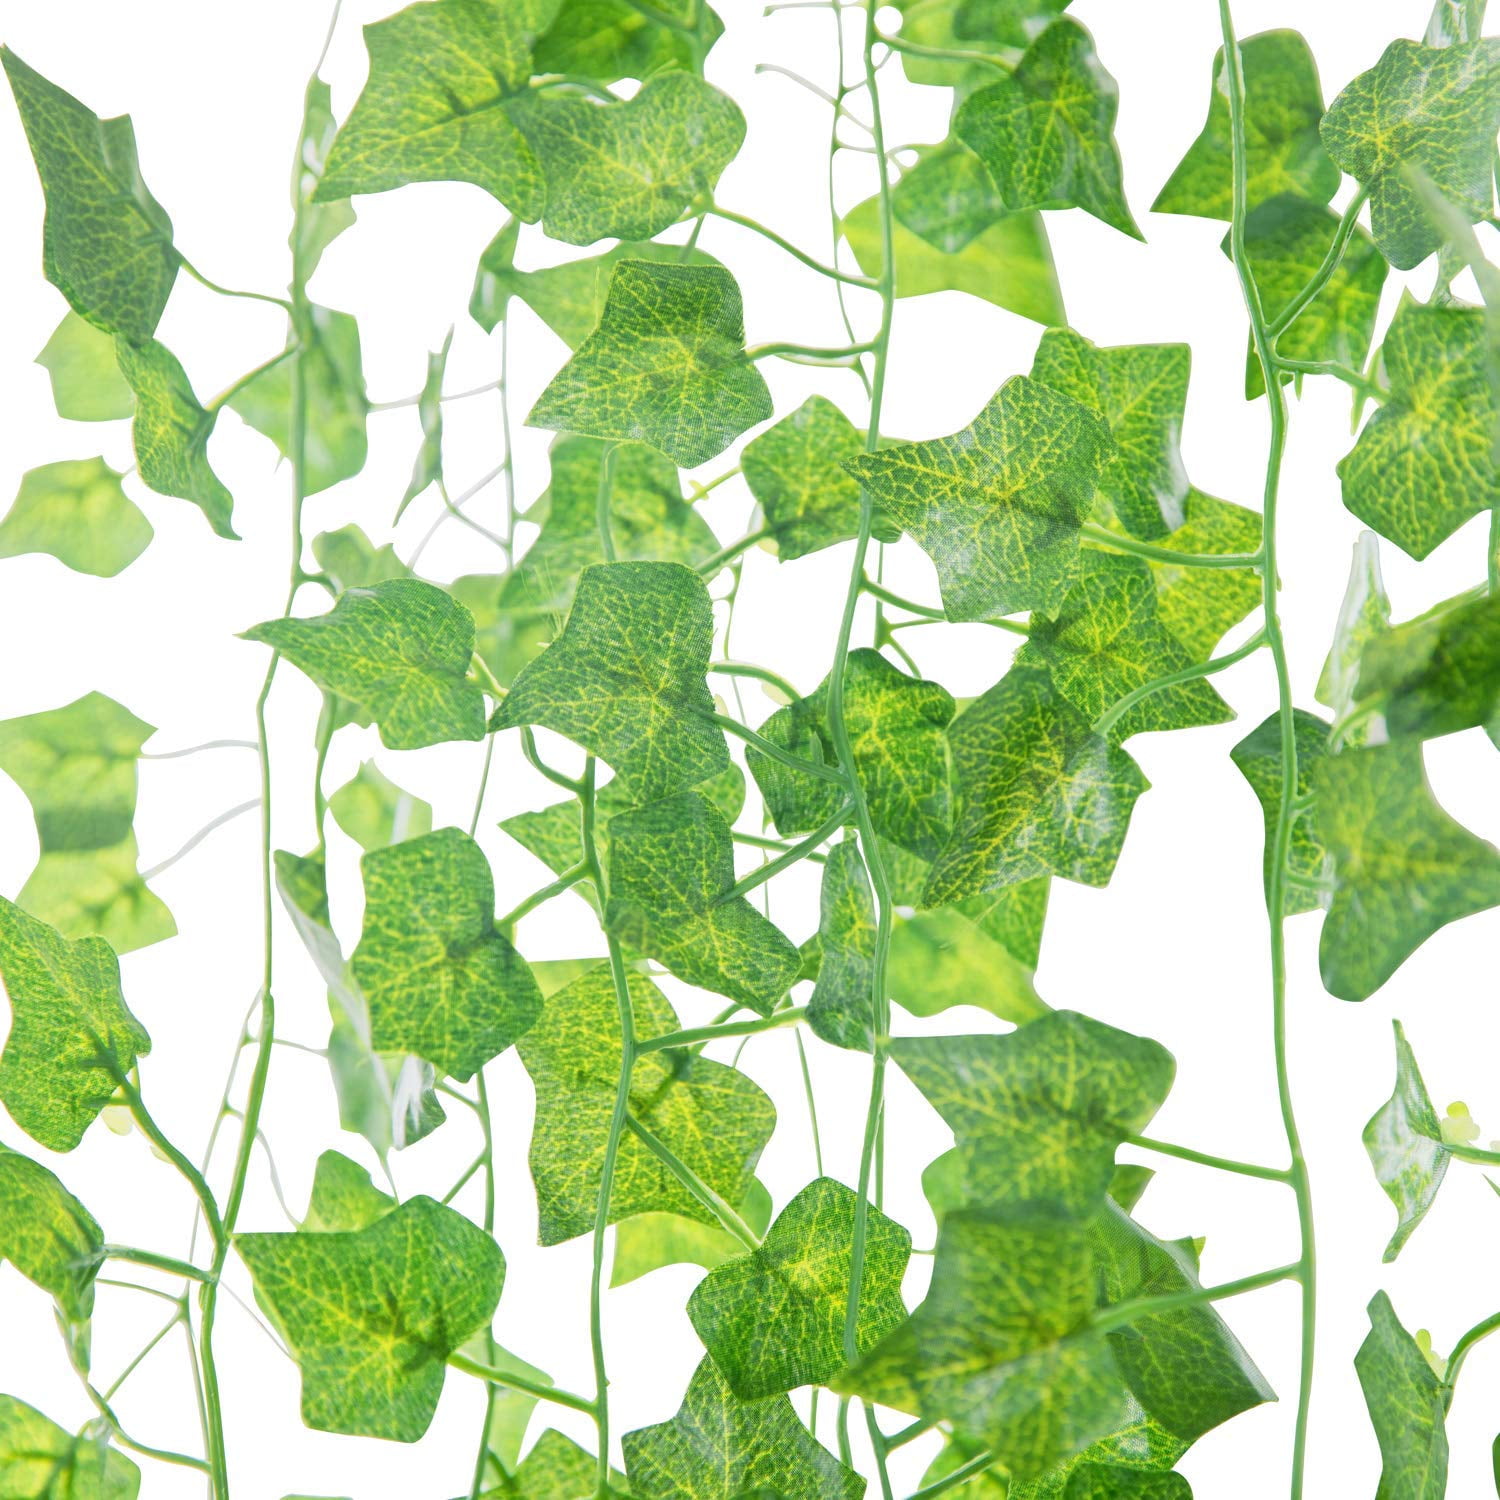 Artificial Plants Vine Fake Foliage Leaf Ivy Garland Home Room DIY Wall Decor 